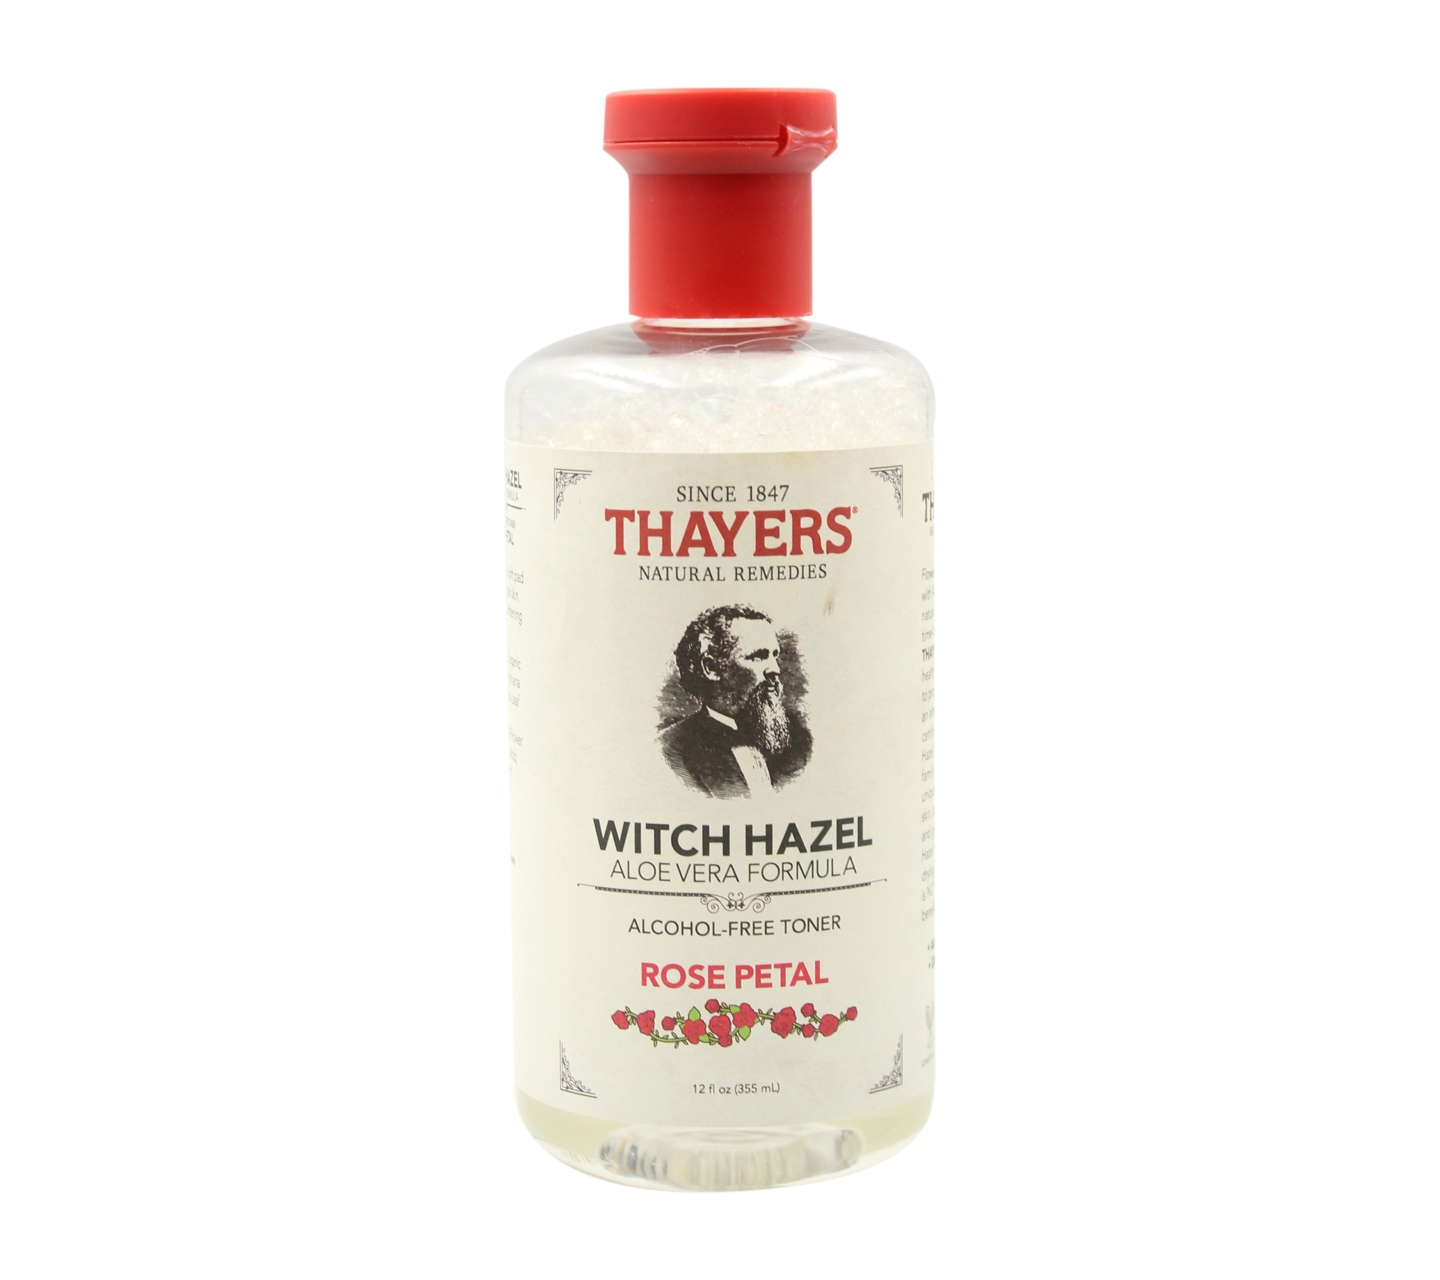 Thayers Witch Hazel Aloe Vera Formula Rose Petal Skin Care